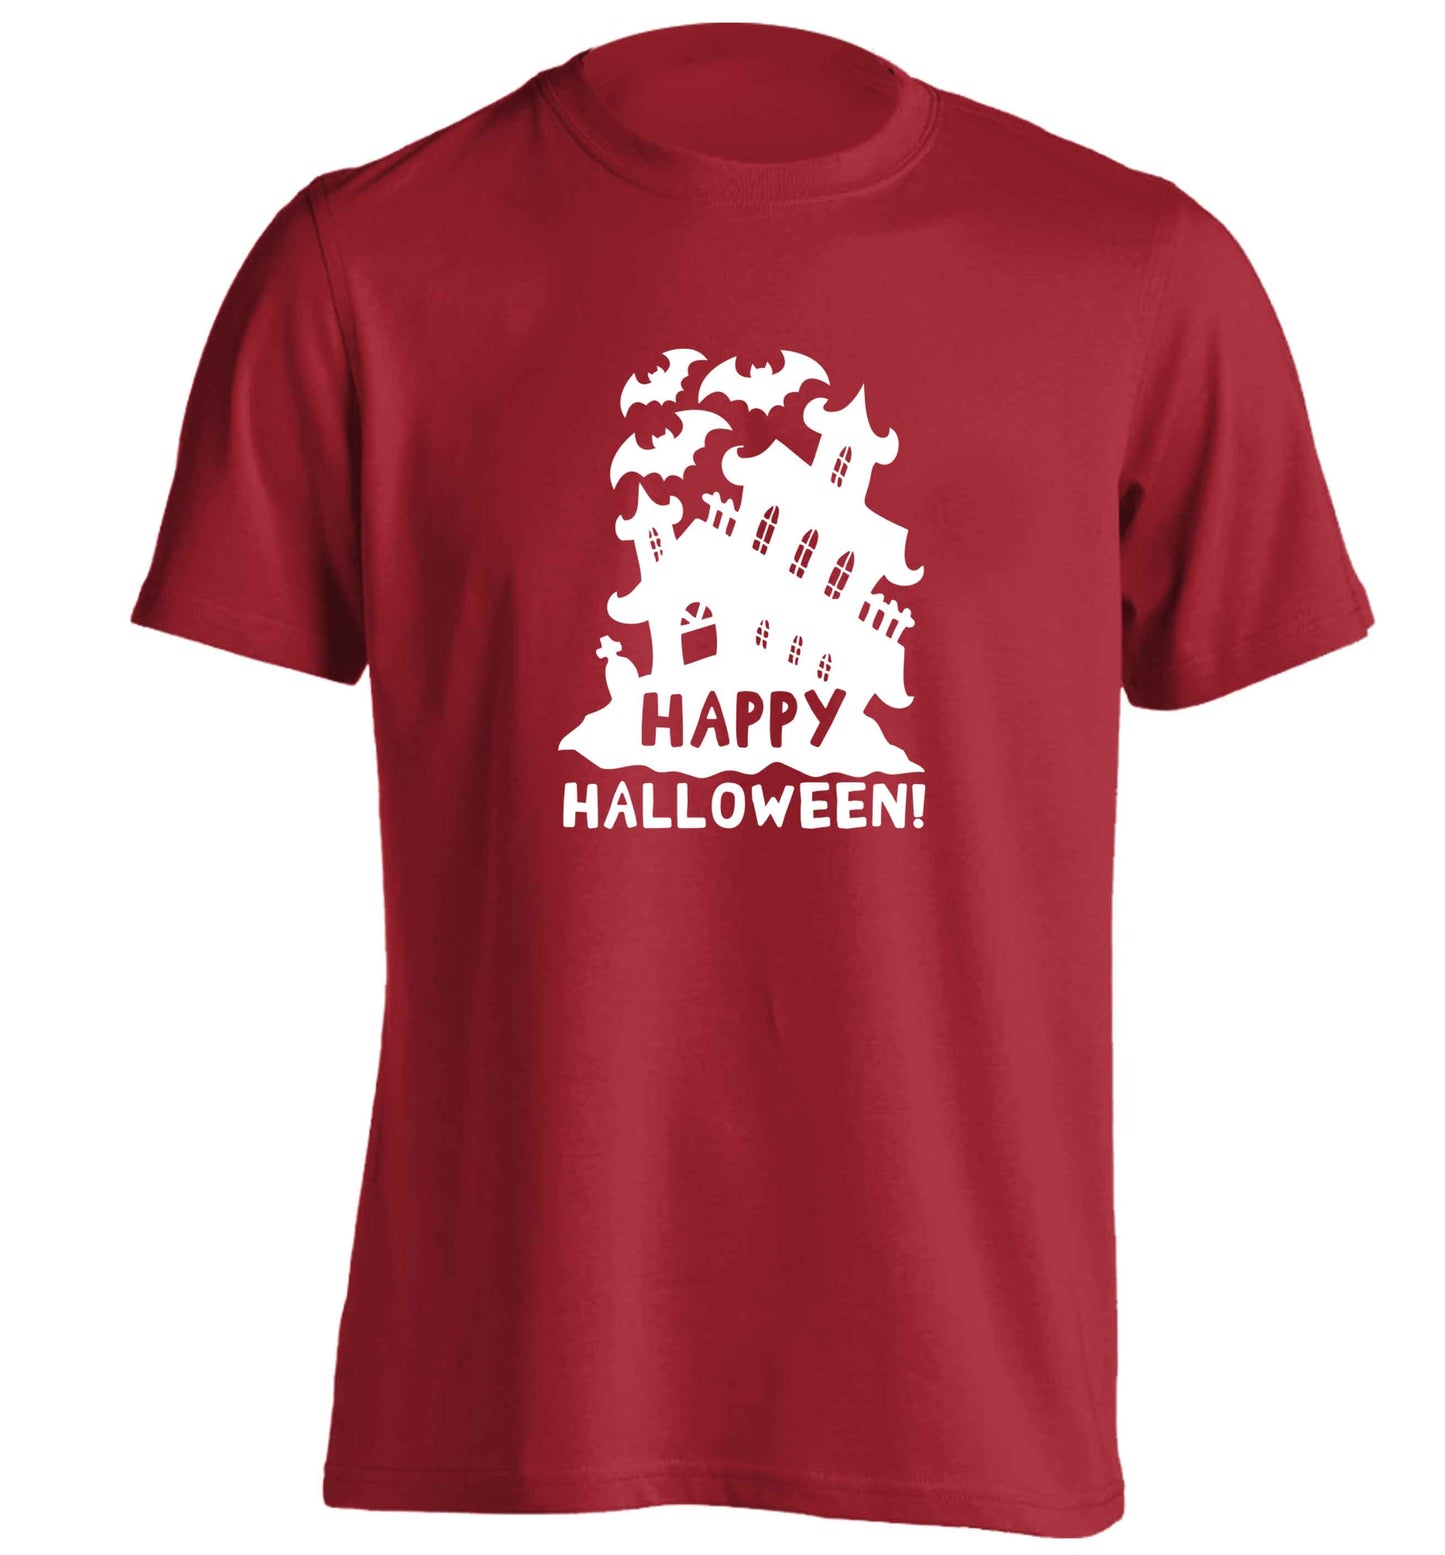 Happy halloween - haunted house adults unisex red Tshirt 2XL